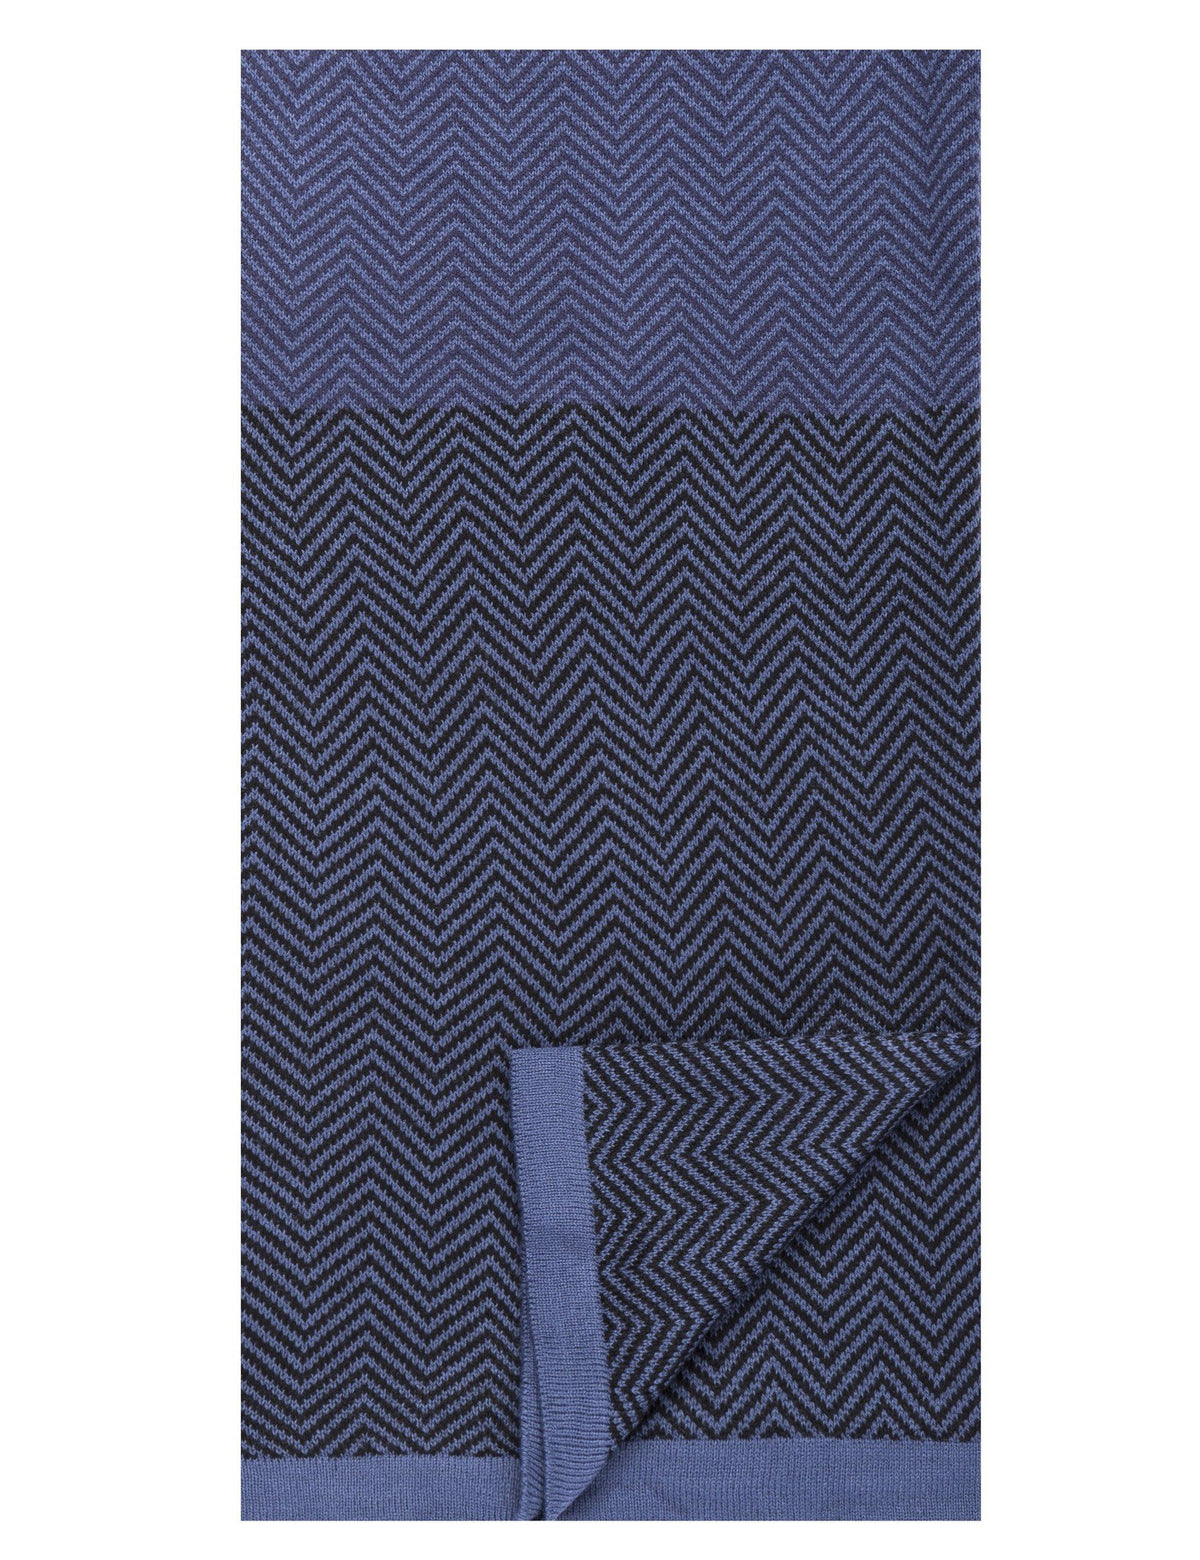 Men's Uptown Premium Knit Color Blocked Herringbone Scarf - Navy/Black